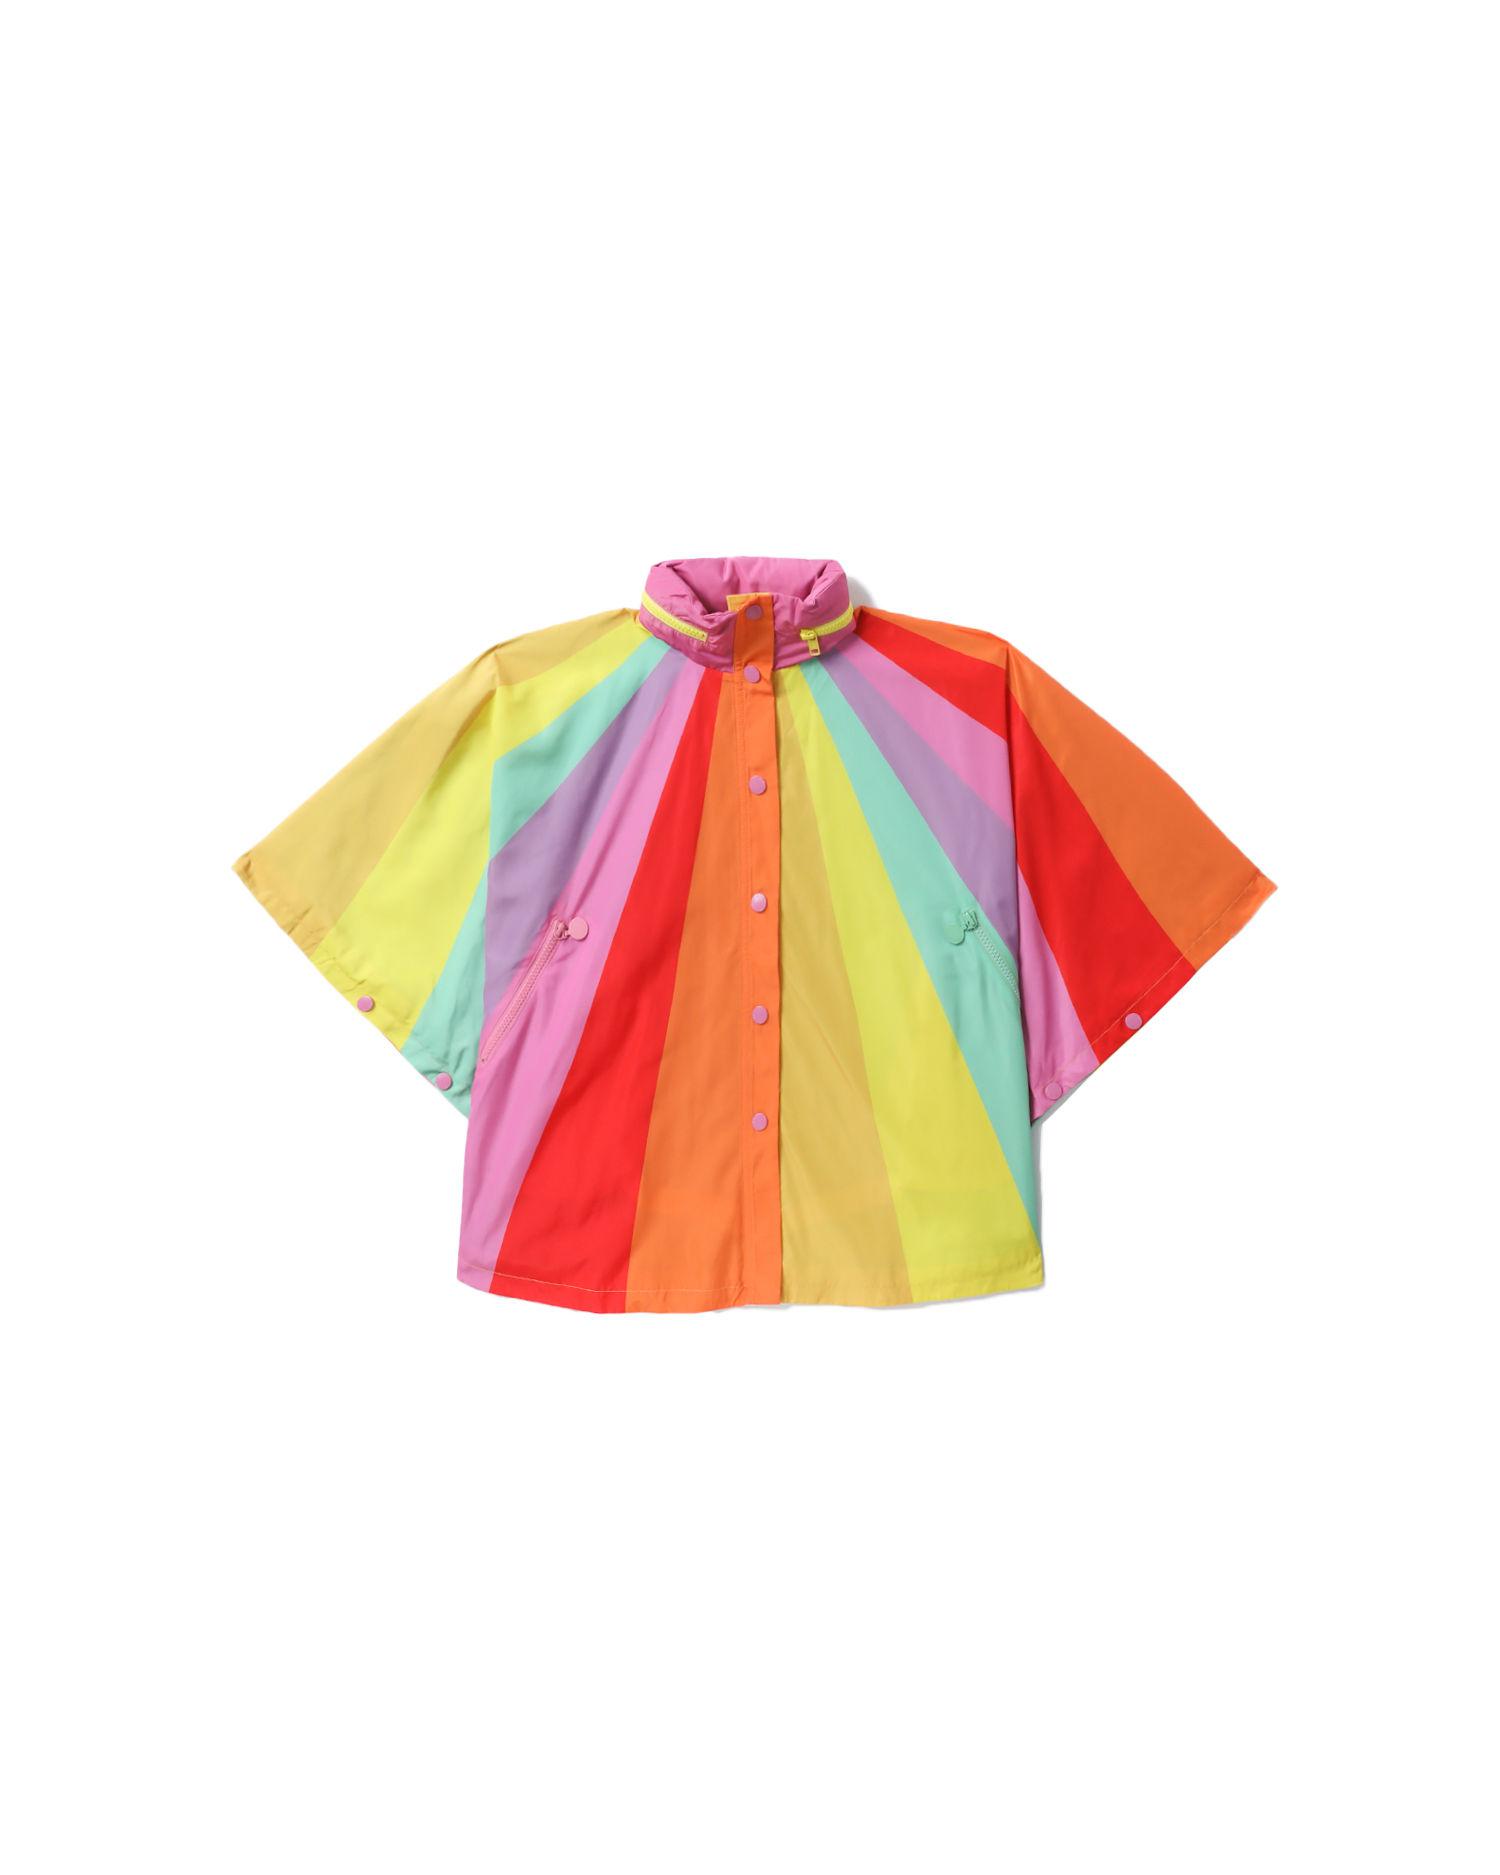 Rainbow striped jacket by STELLA MCCARTNEY